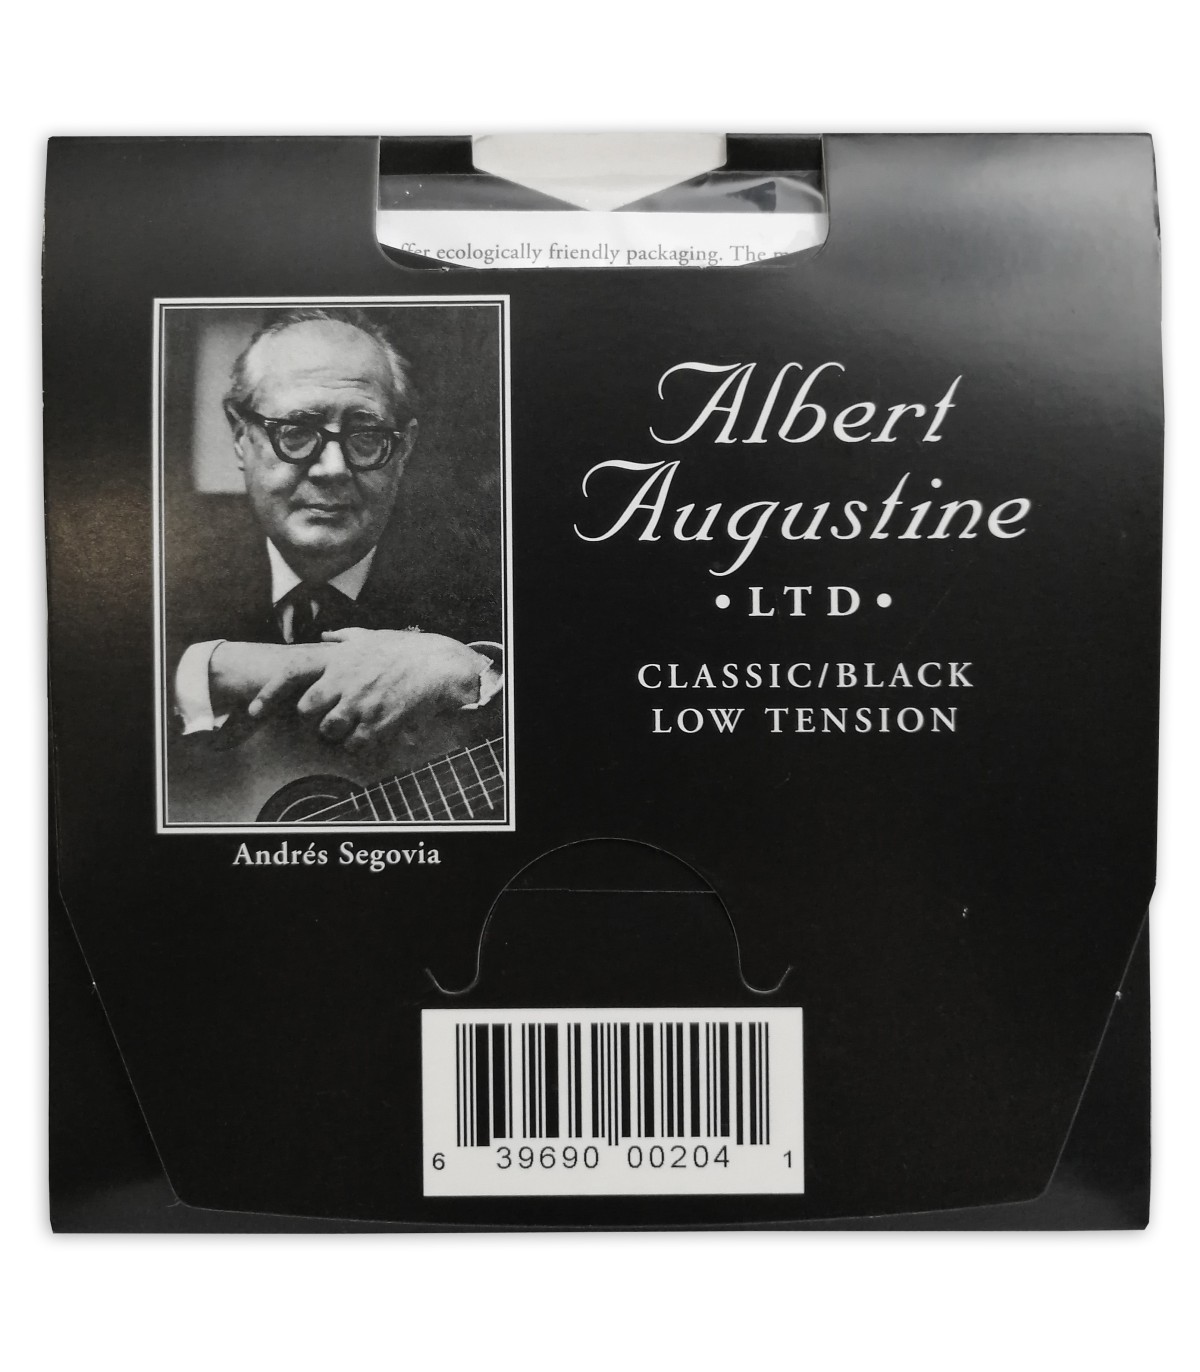 Augustine Classic Black Gt Clássica, Jogo cordas